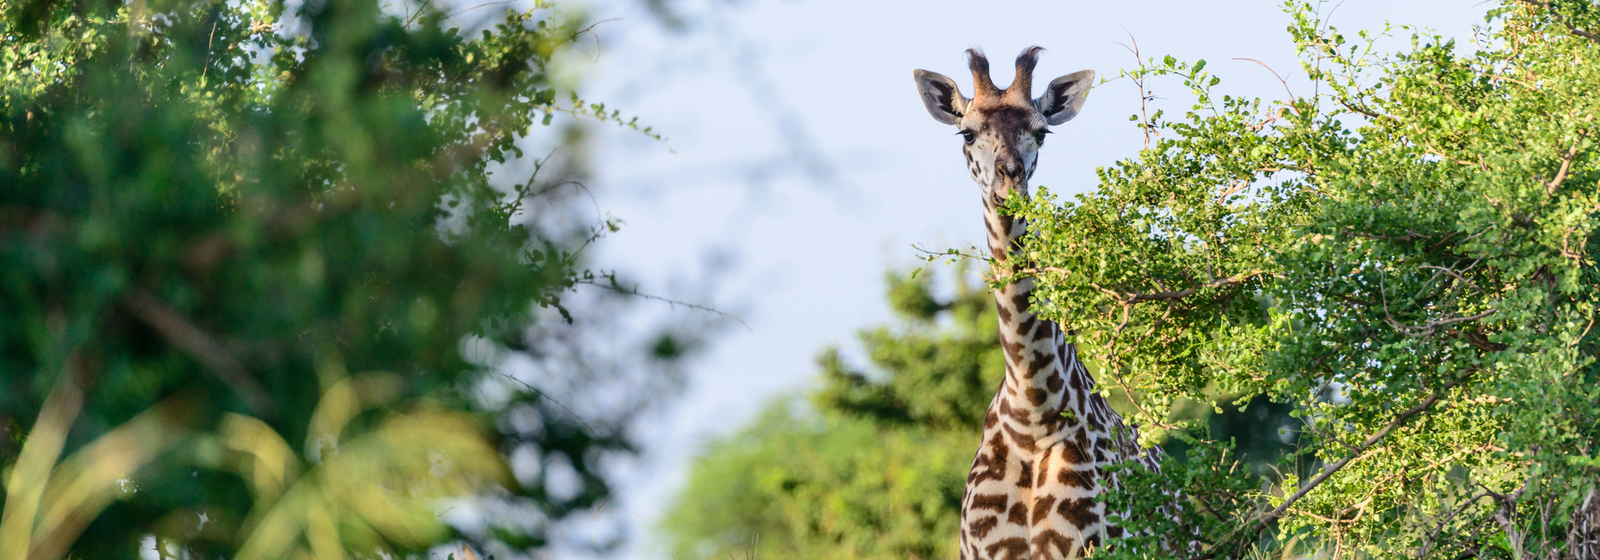 Support giraffe conservation